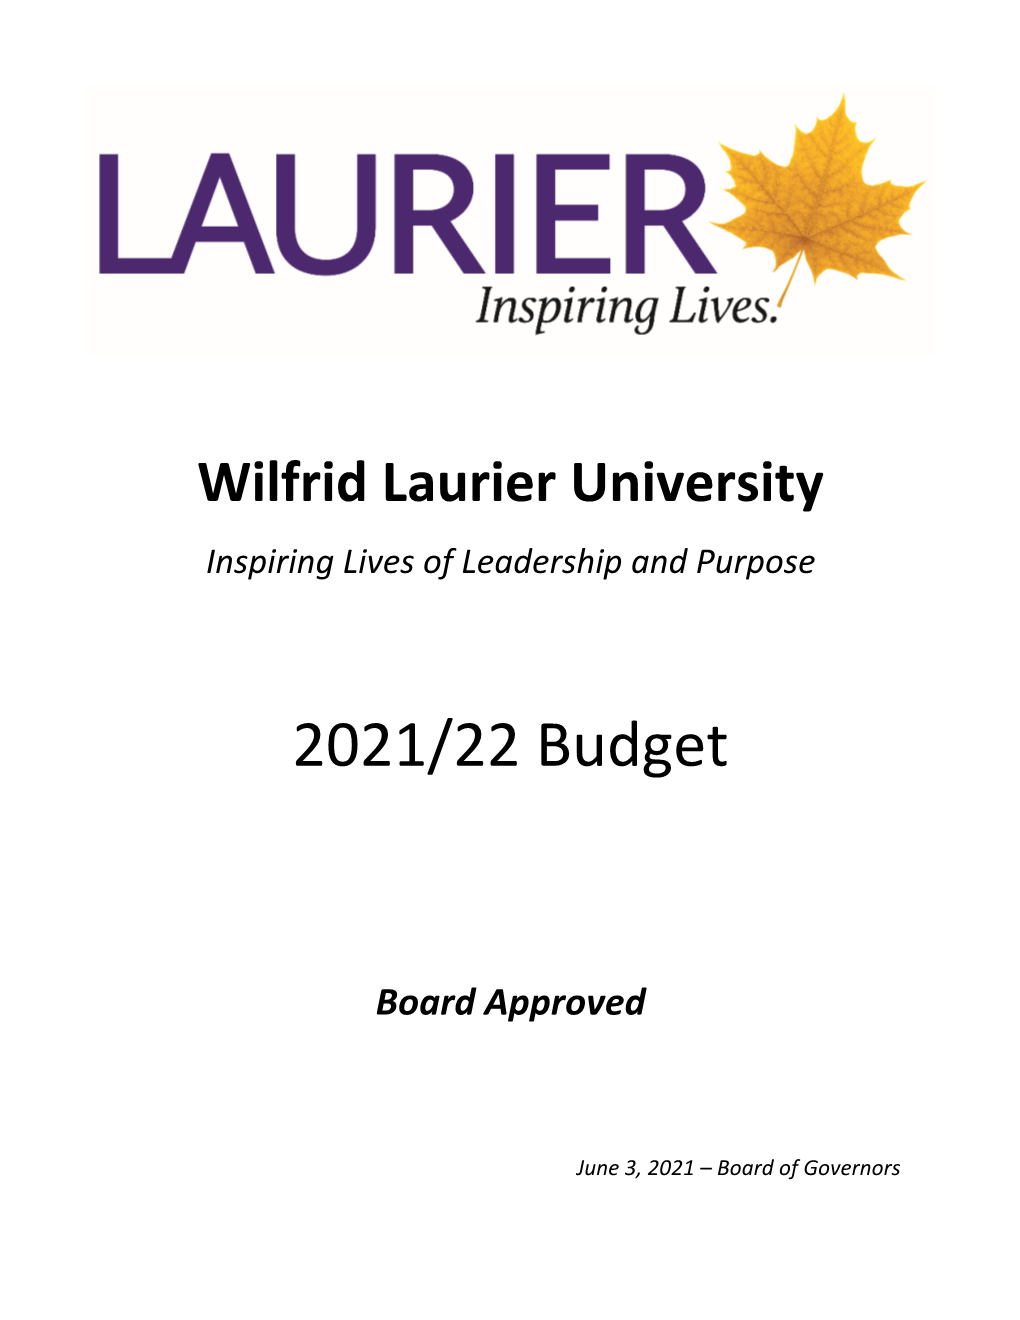 University Operating Budget 2021/22